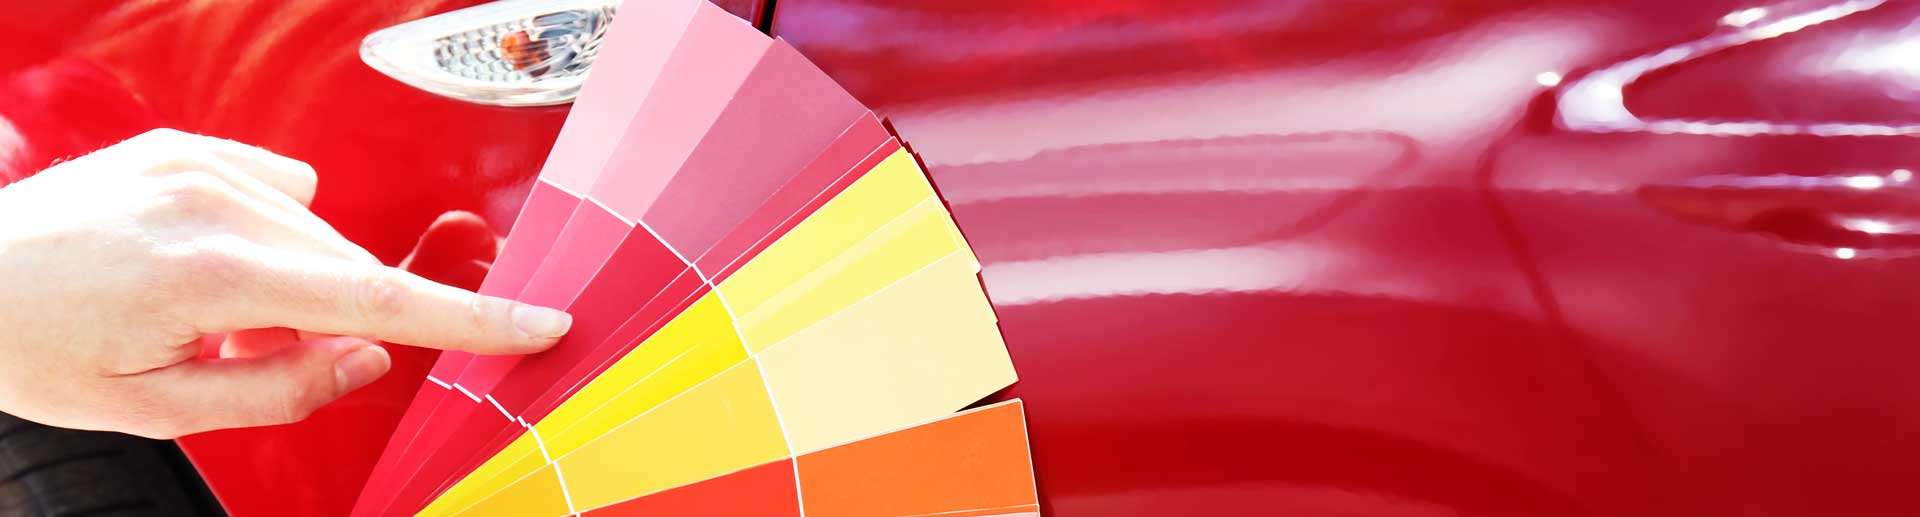 paint-samples-choosing-color-for-car